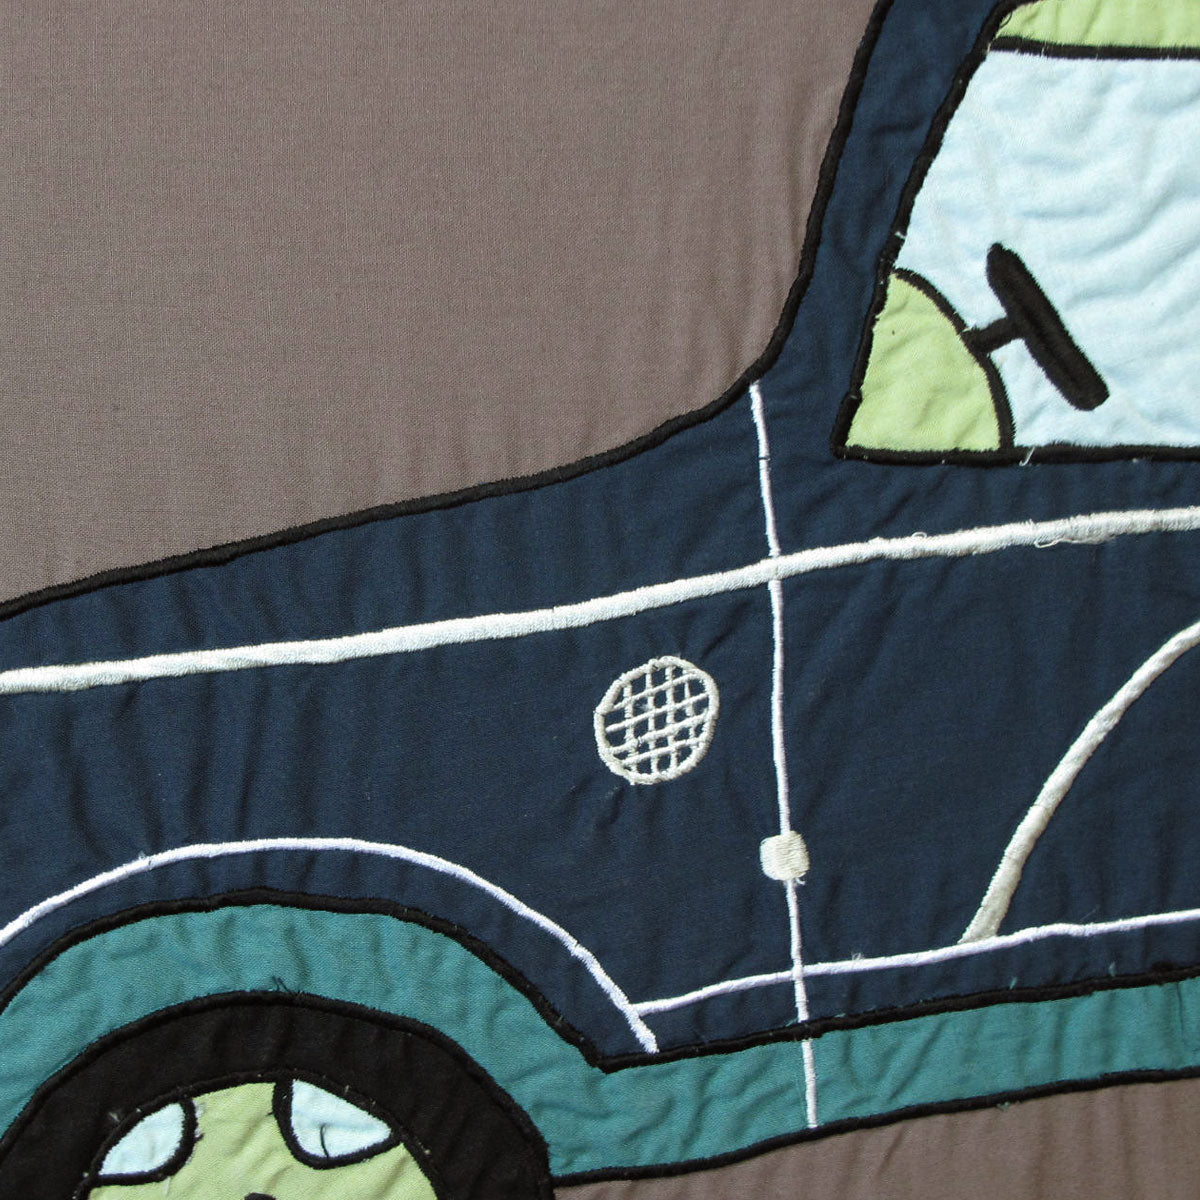 Jeep Wrangler Embroidered Quilt Cover Set Single - Newstart Furniture